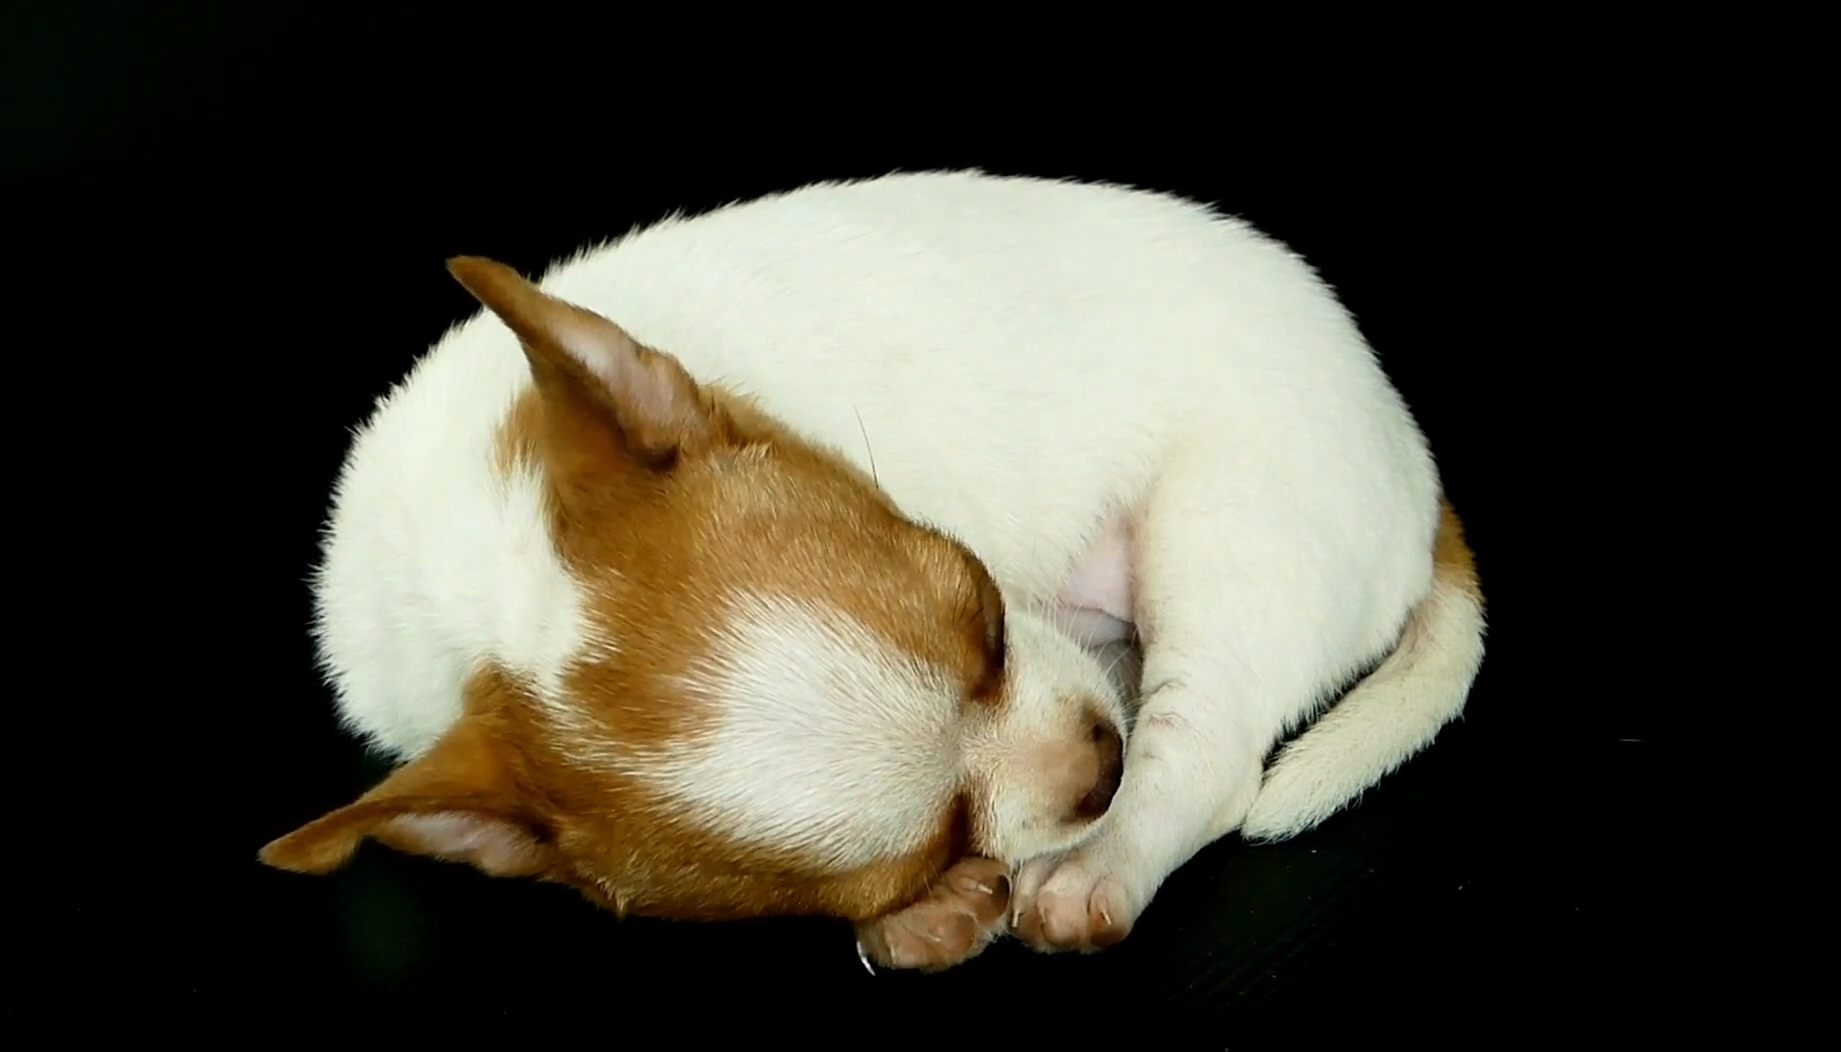 How to improve your Chihuahua’s sleep?